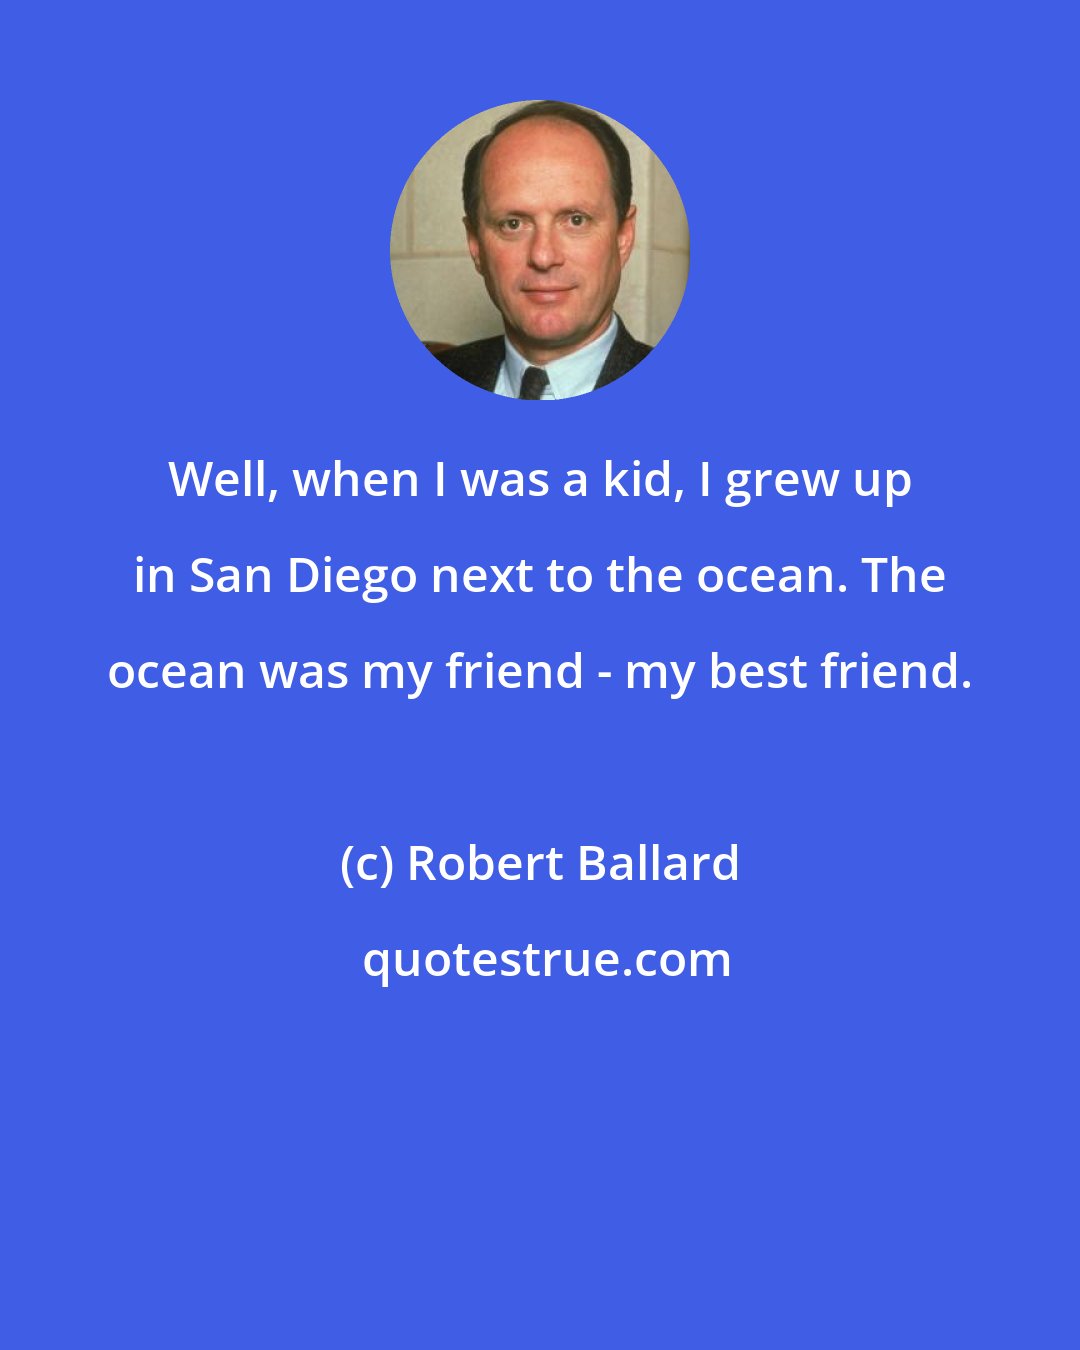 Robert Ballard: Well, when I was a kid, I grew up in San Diego next to the ocean. The ocean was my friend - my best friend.